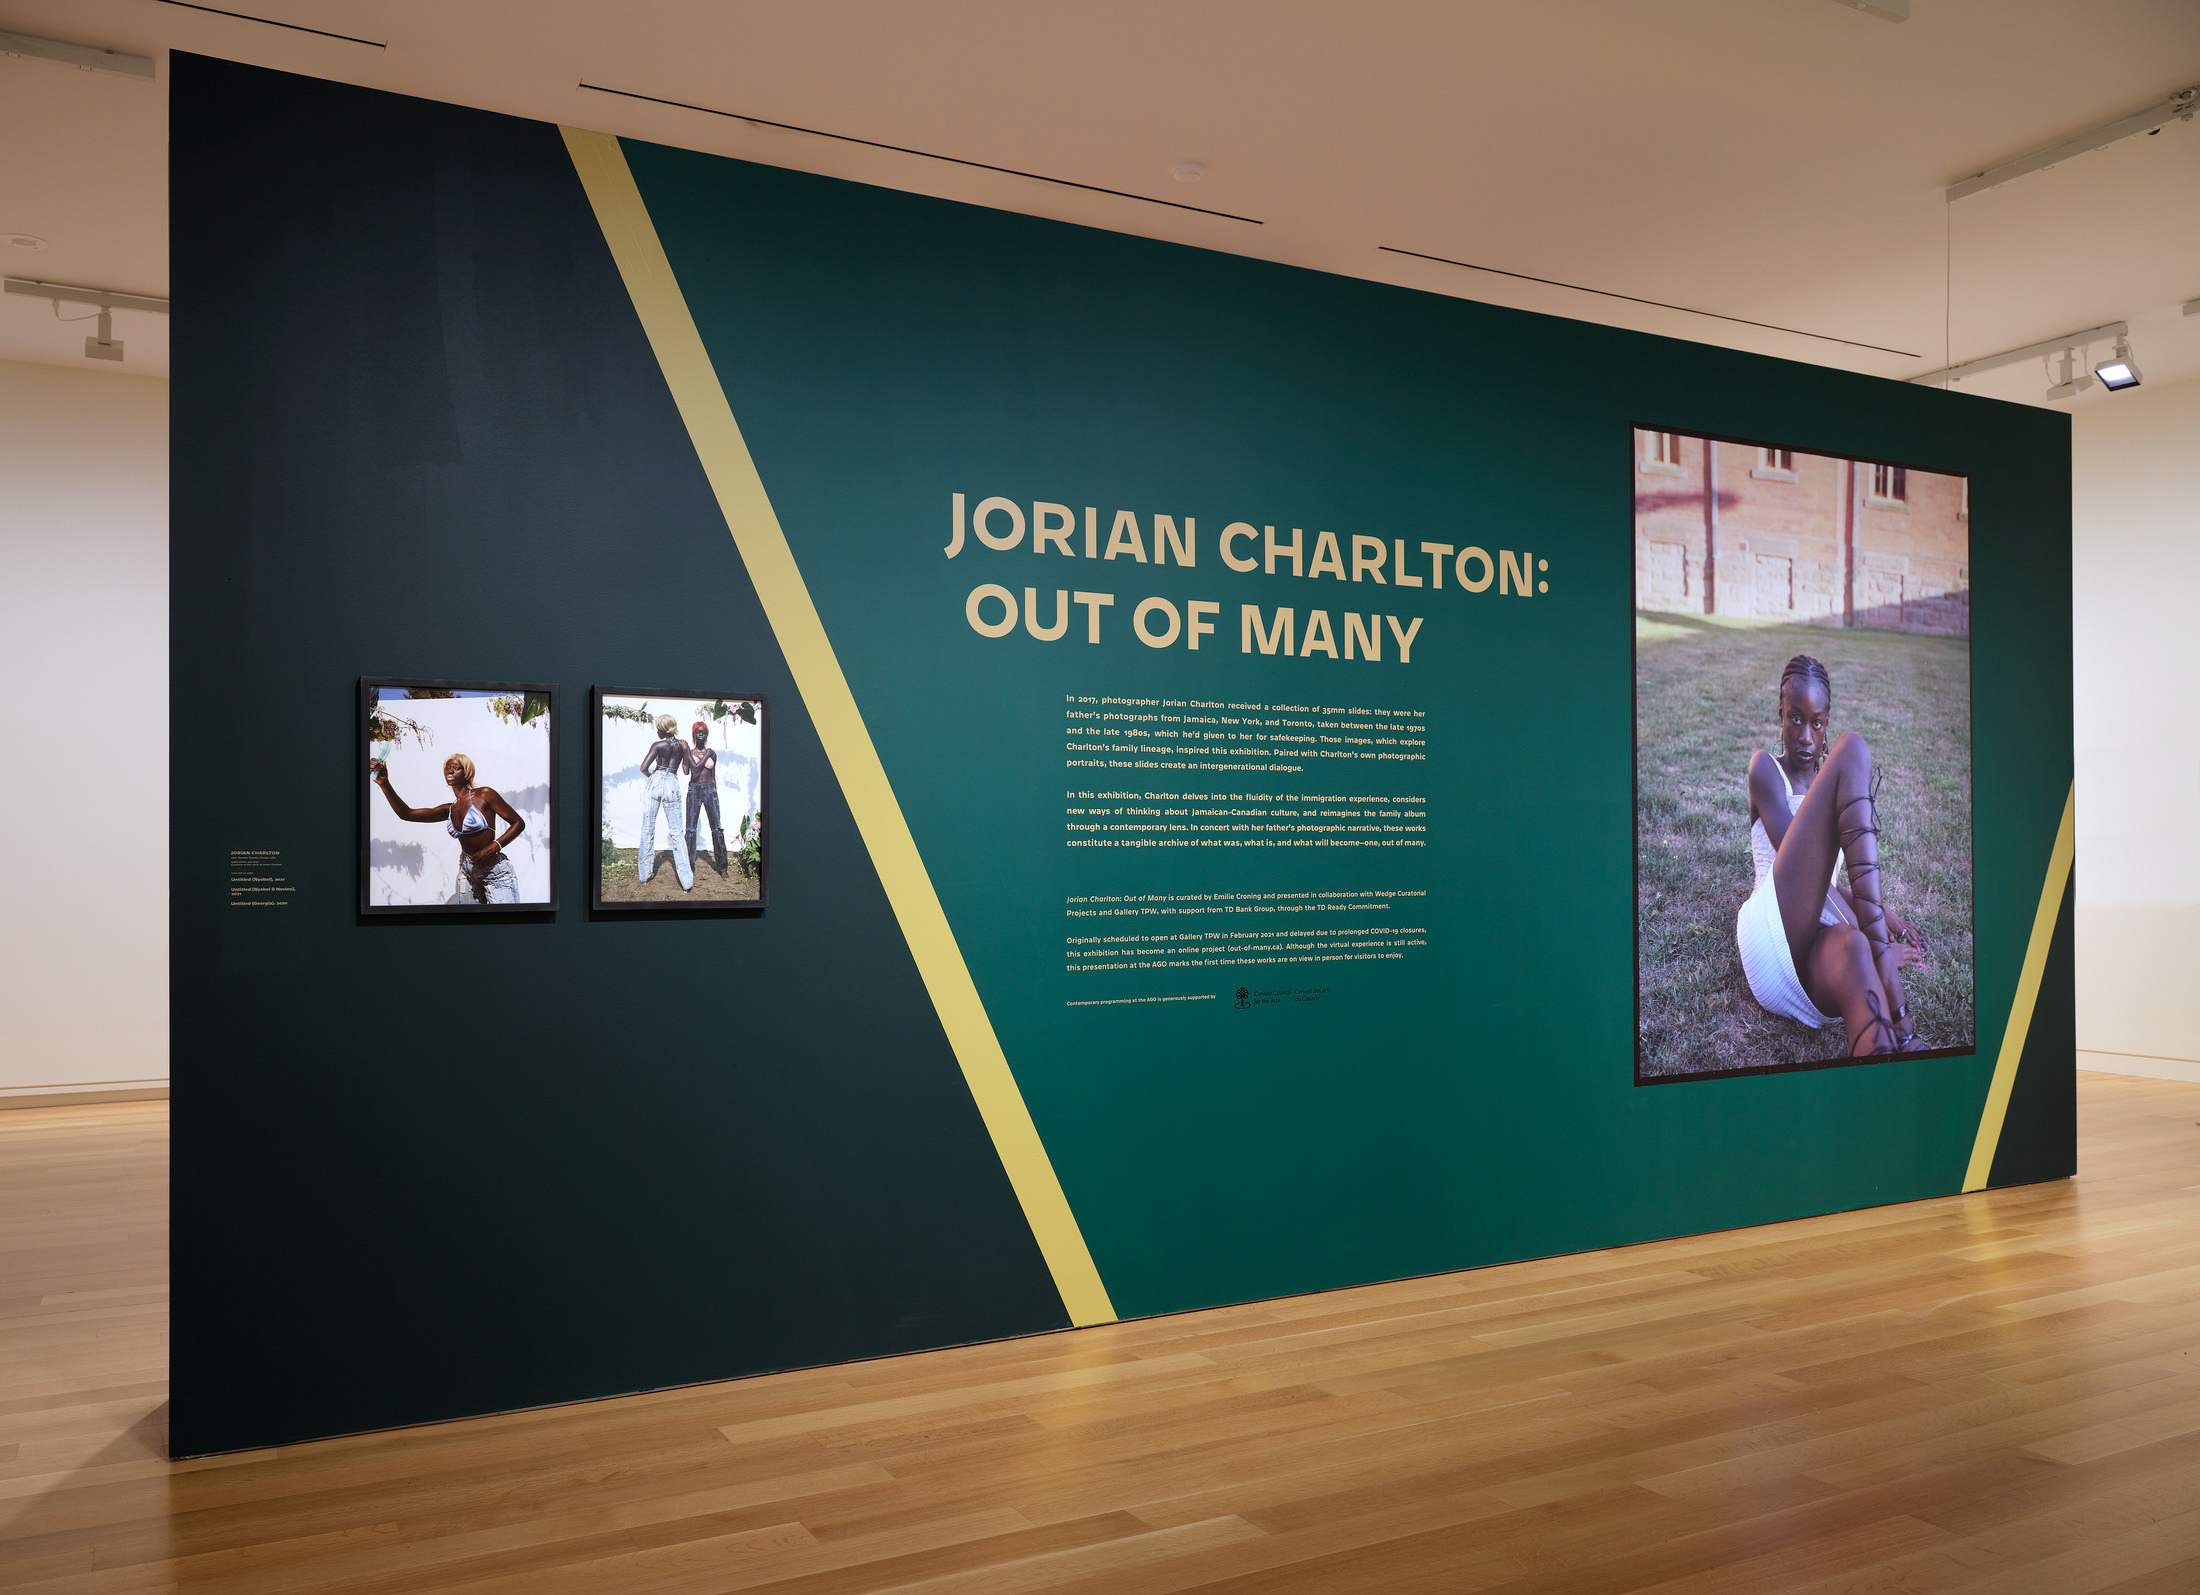     Jorian Charlton, Out of Many, installation view, Art Gallery of Ontario, 2021–22. Artworks © Jorian Charlton. Photo © AGO

